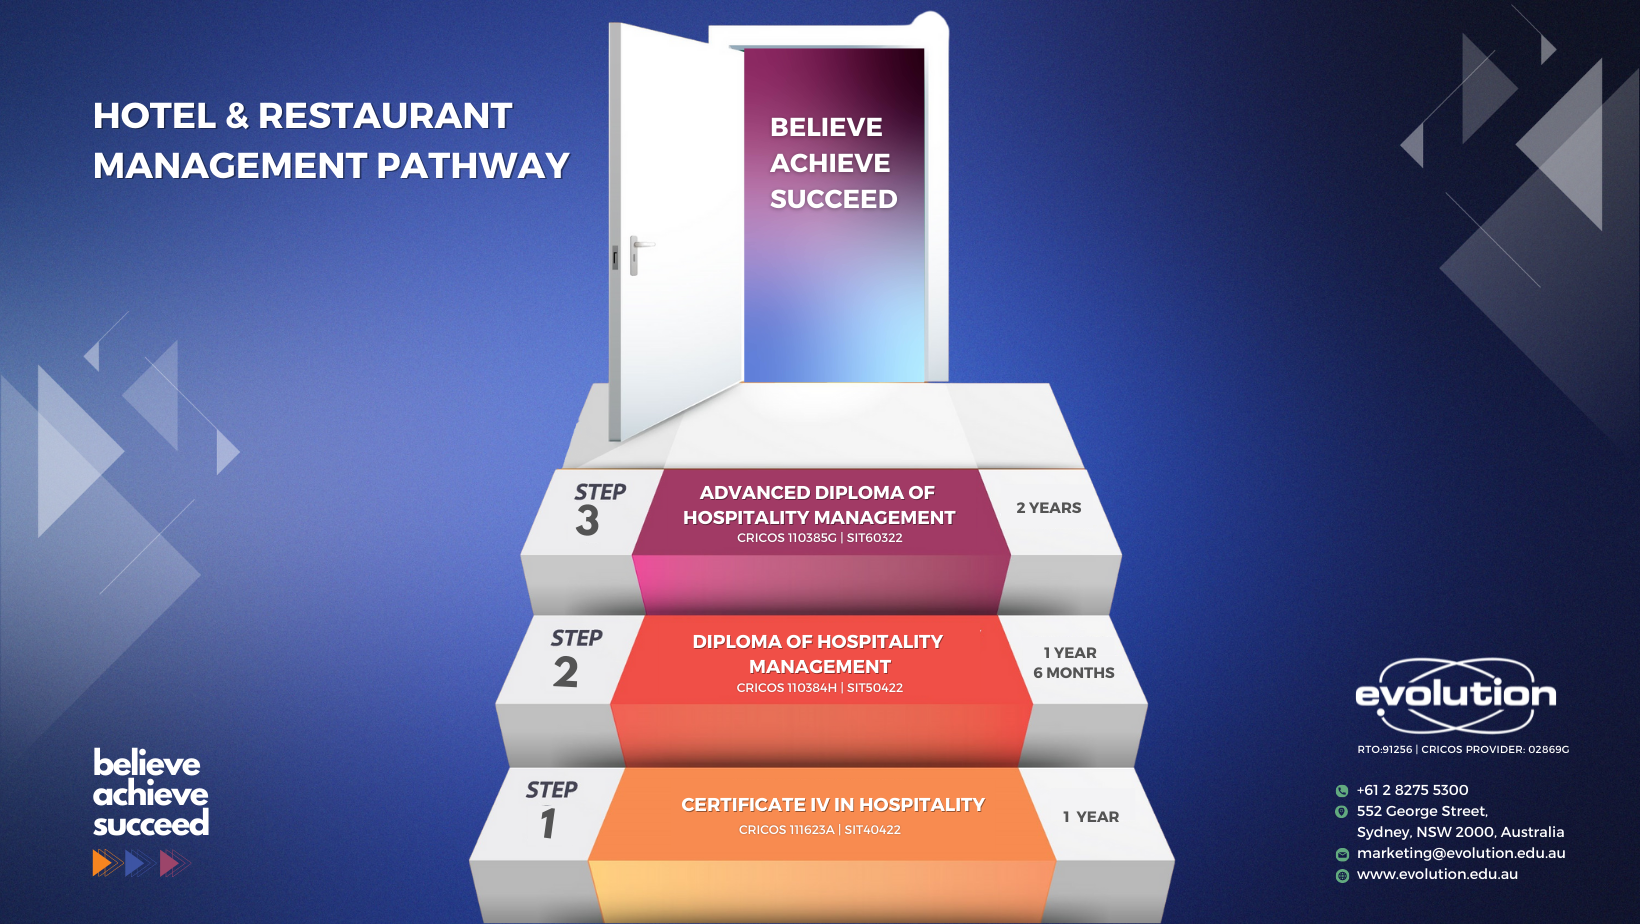 Hotel and Restaurant management pathways - Evolution Hospitality Institute